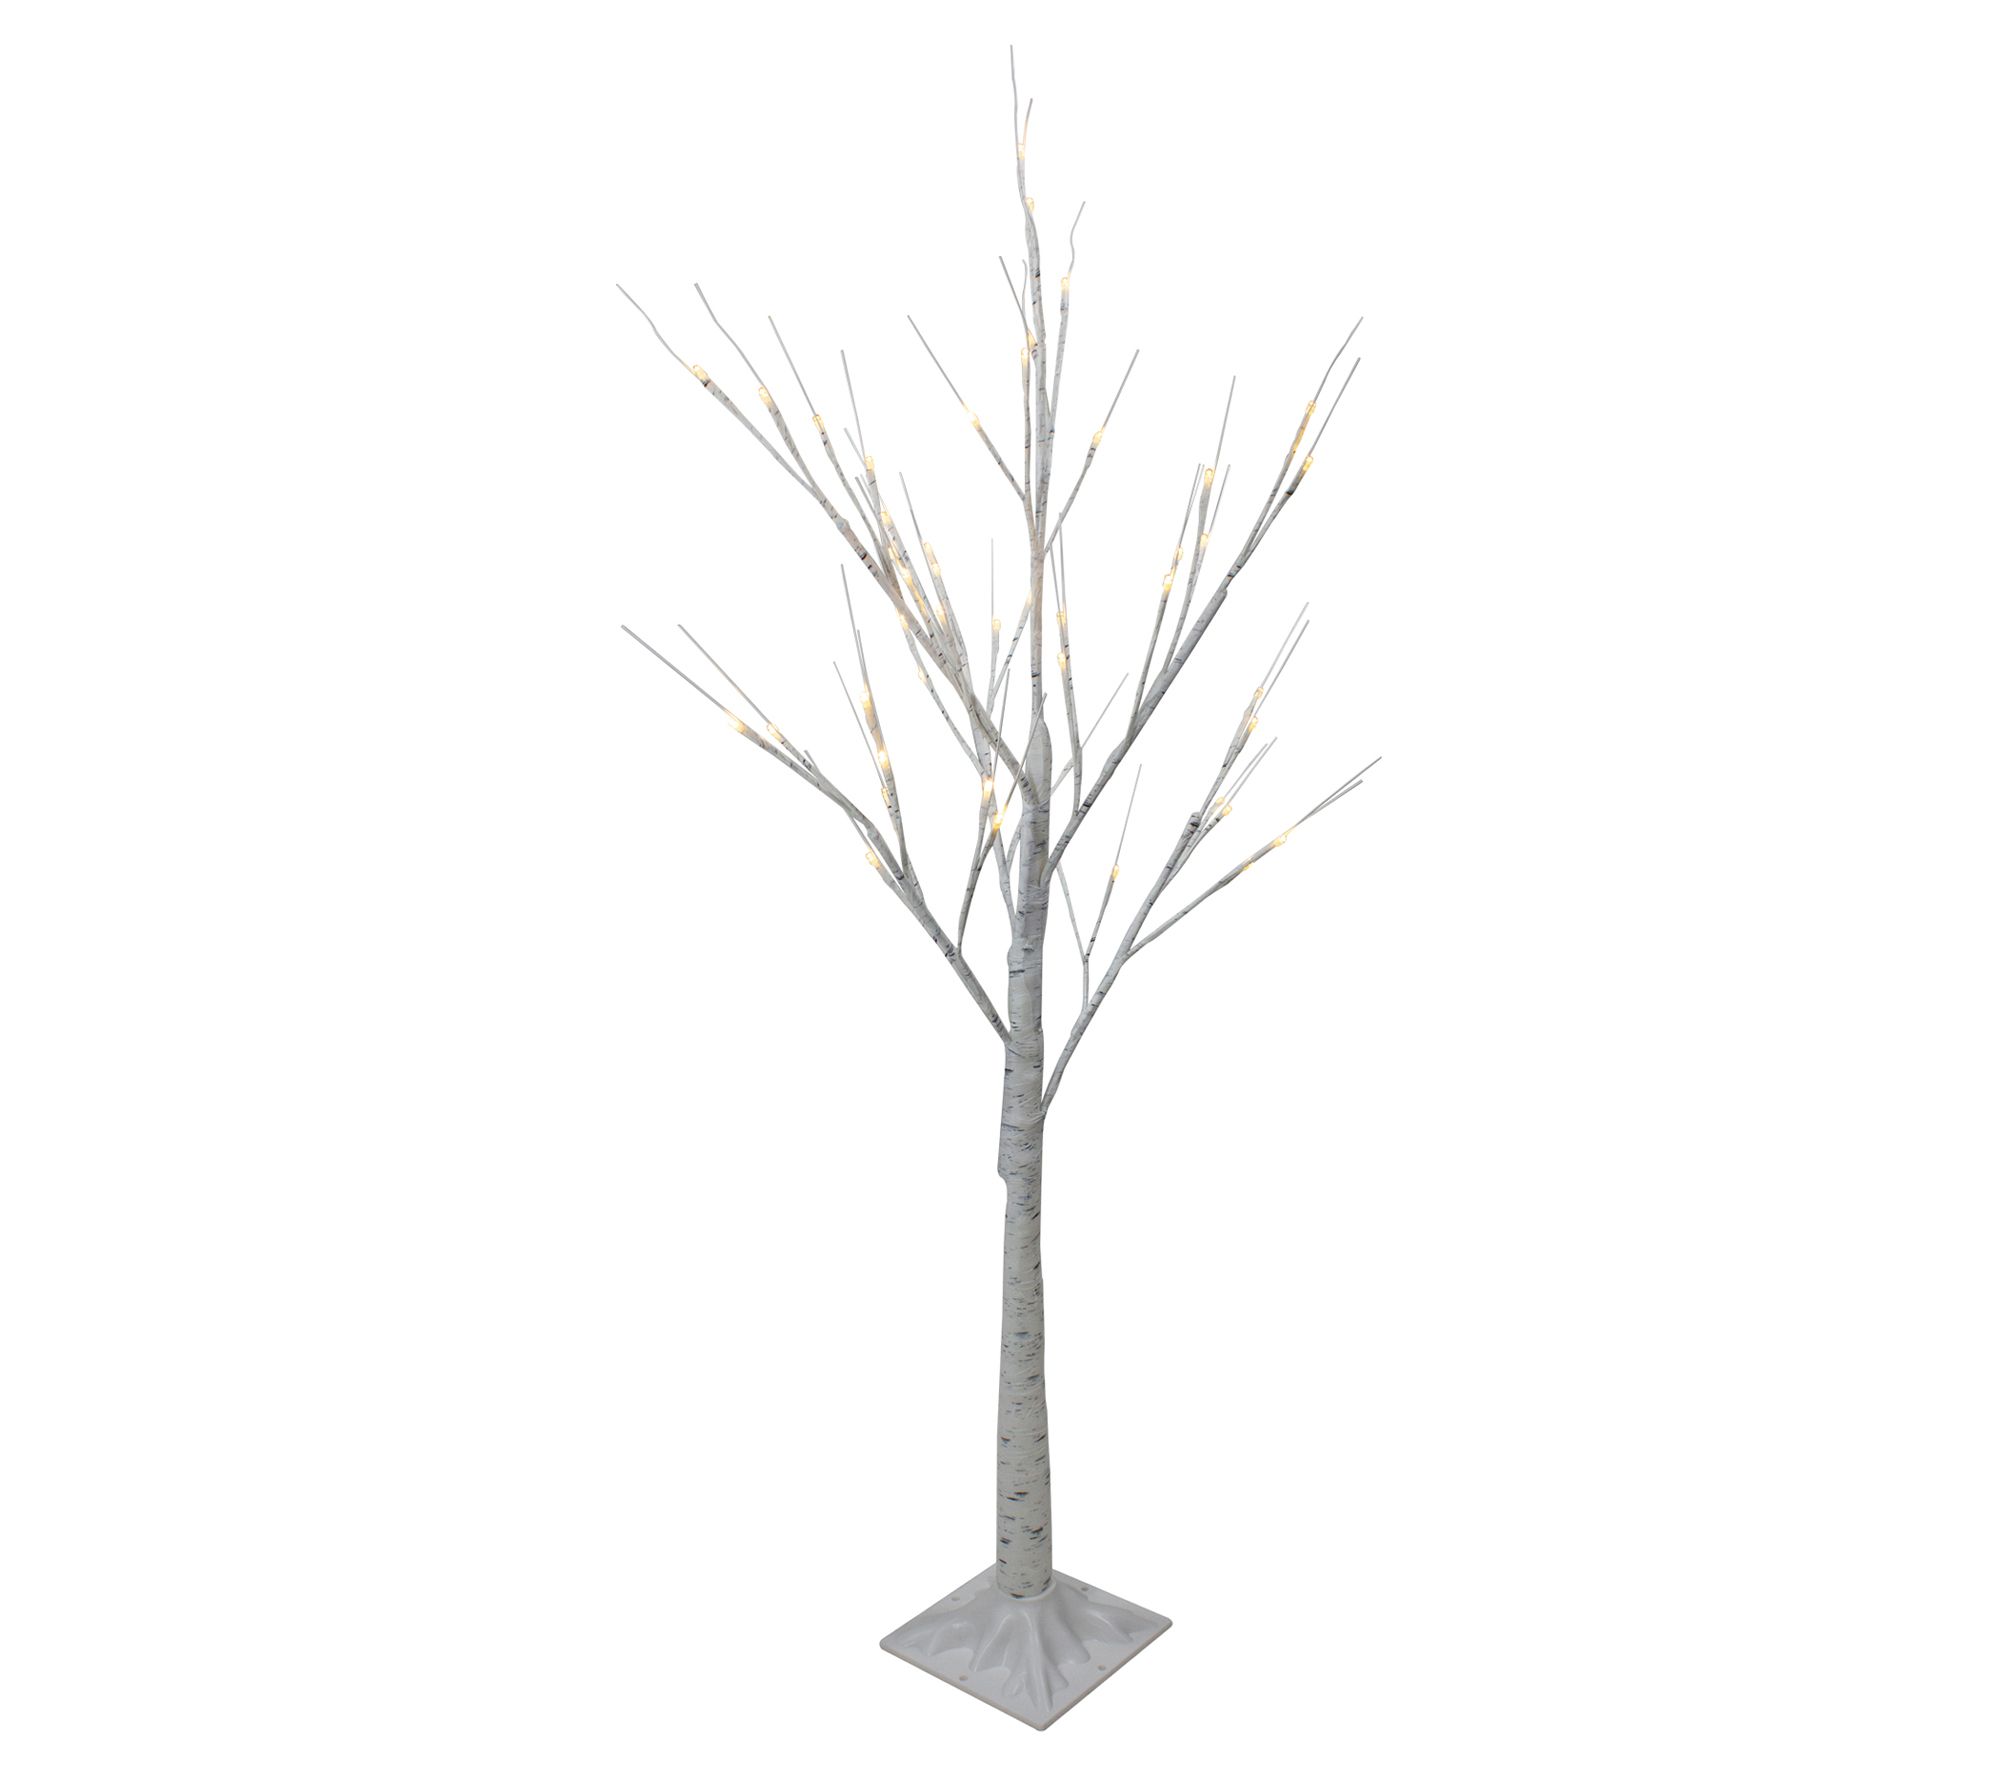 Northlight 5' LED White Birch Twig Tree